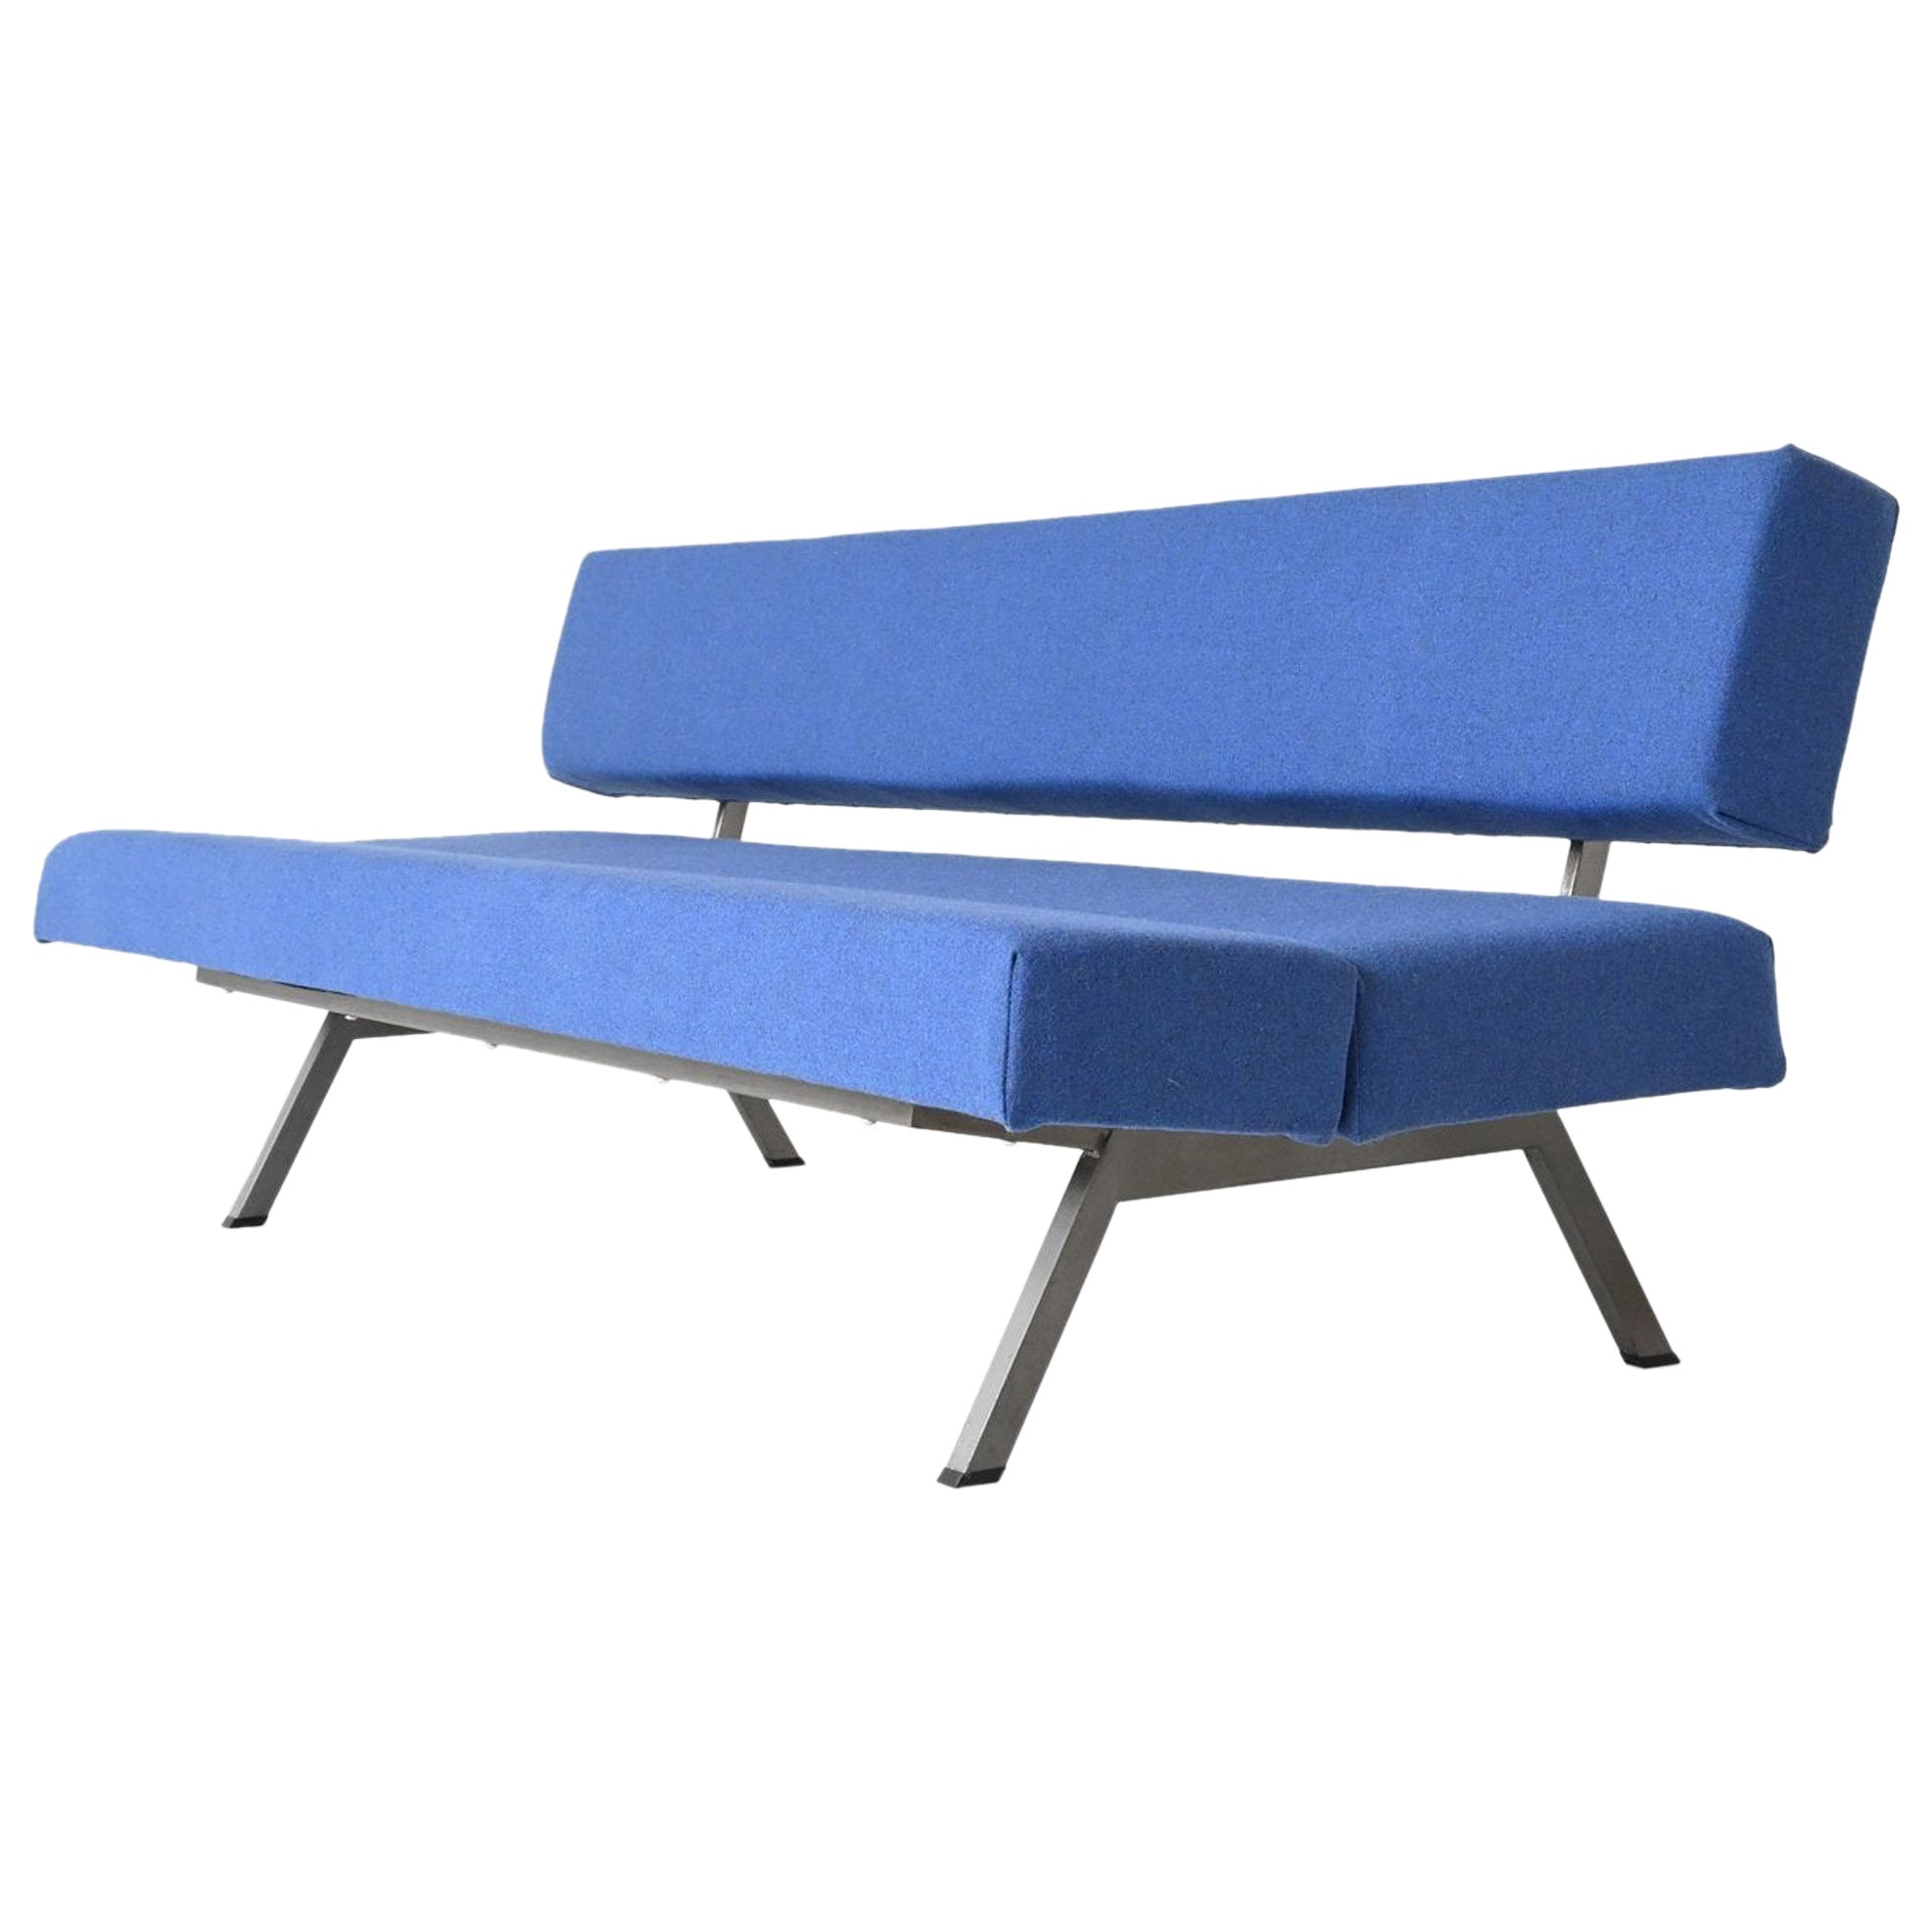 Dutch Modernist Martin Visser Style Daybed Sofa the Netherlands, 1960